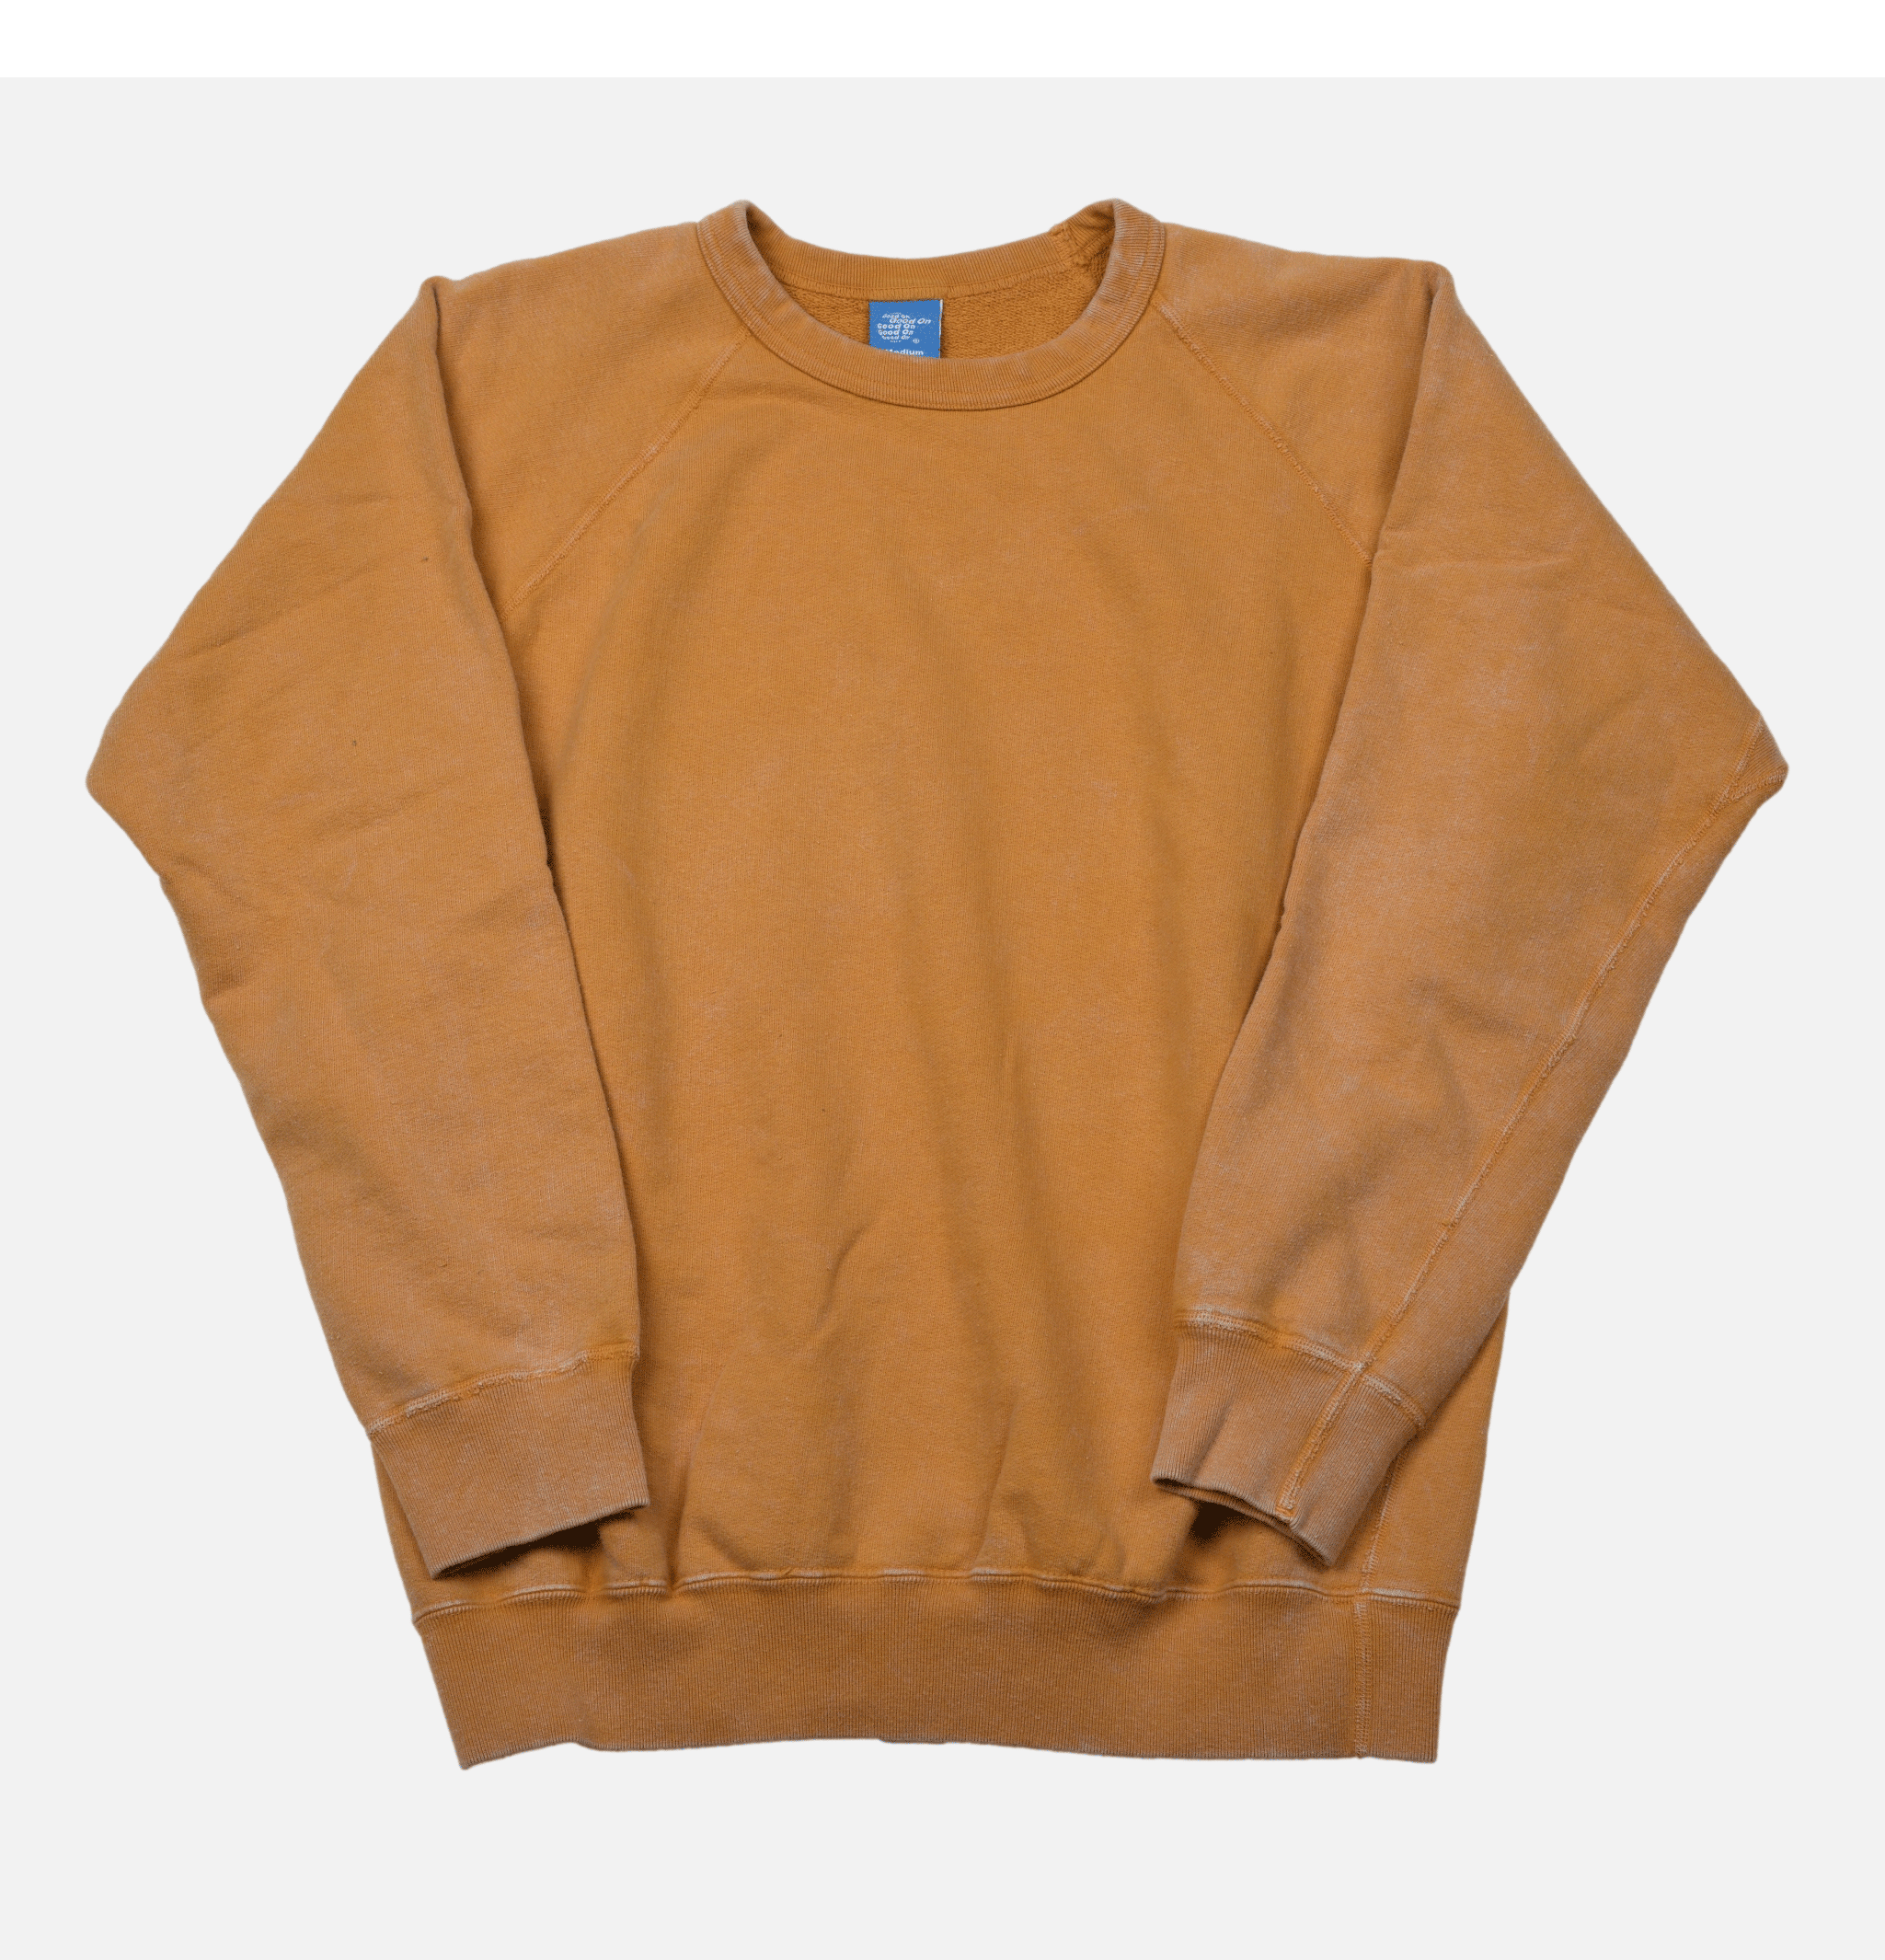 Good On Japan Vintage Dye Sweatshirt Mustard